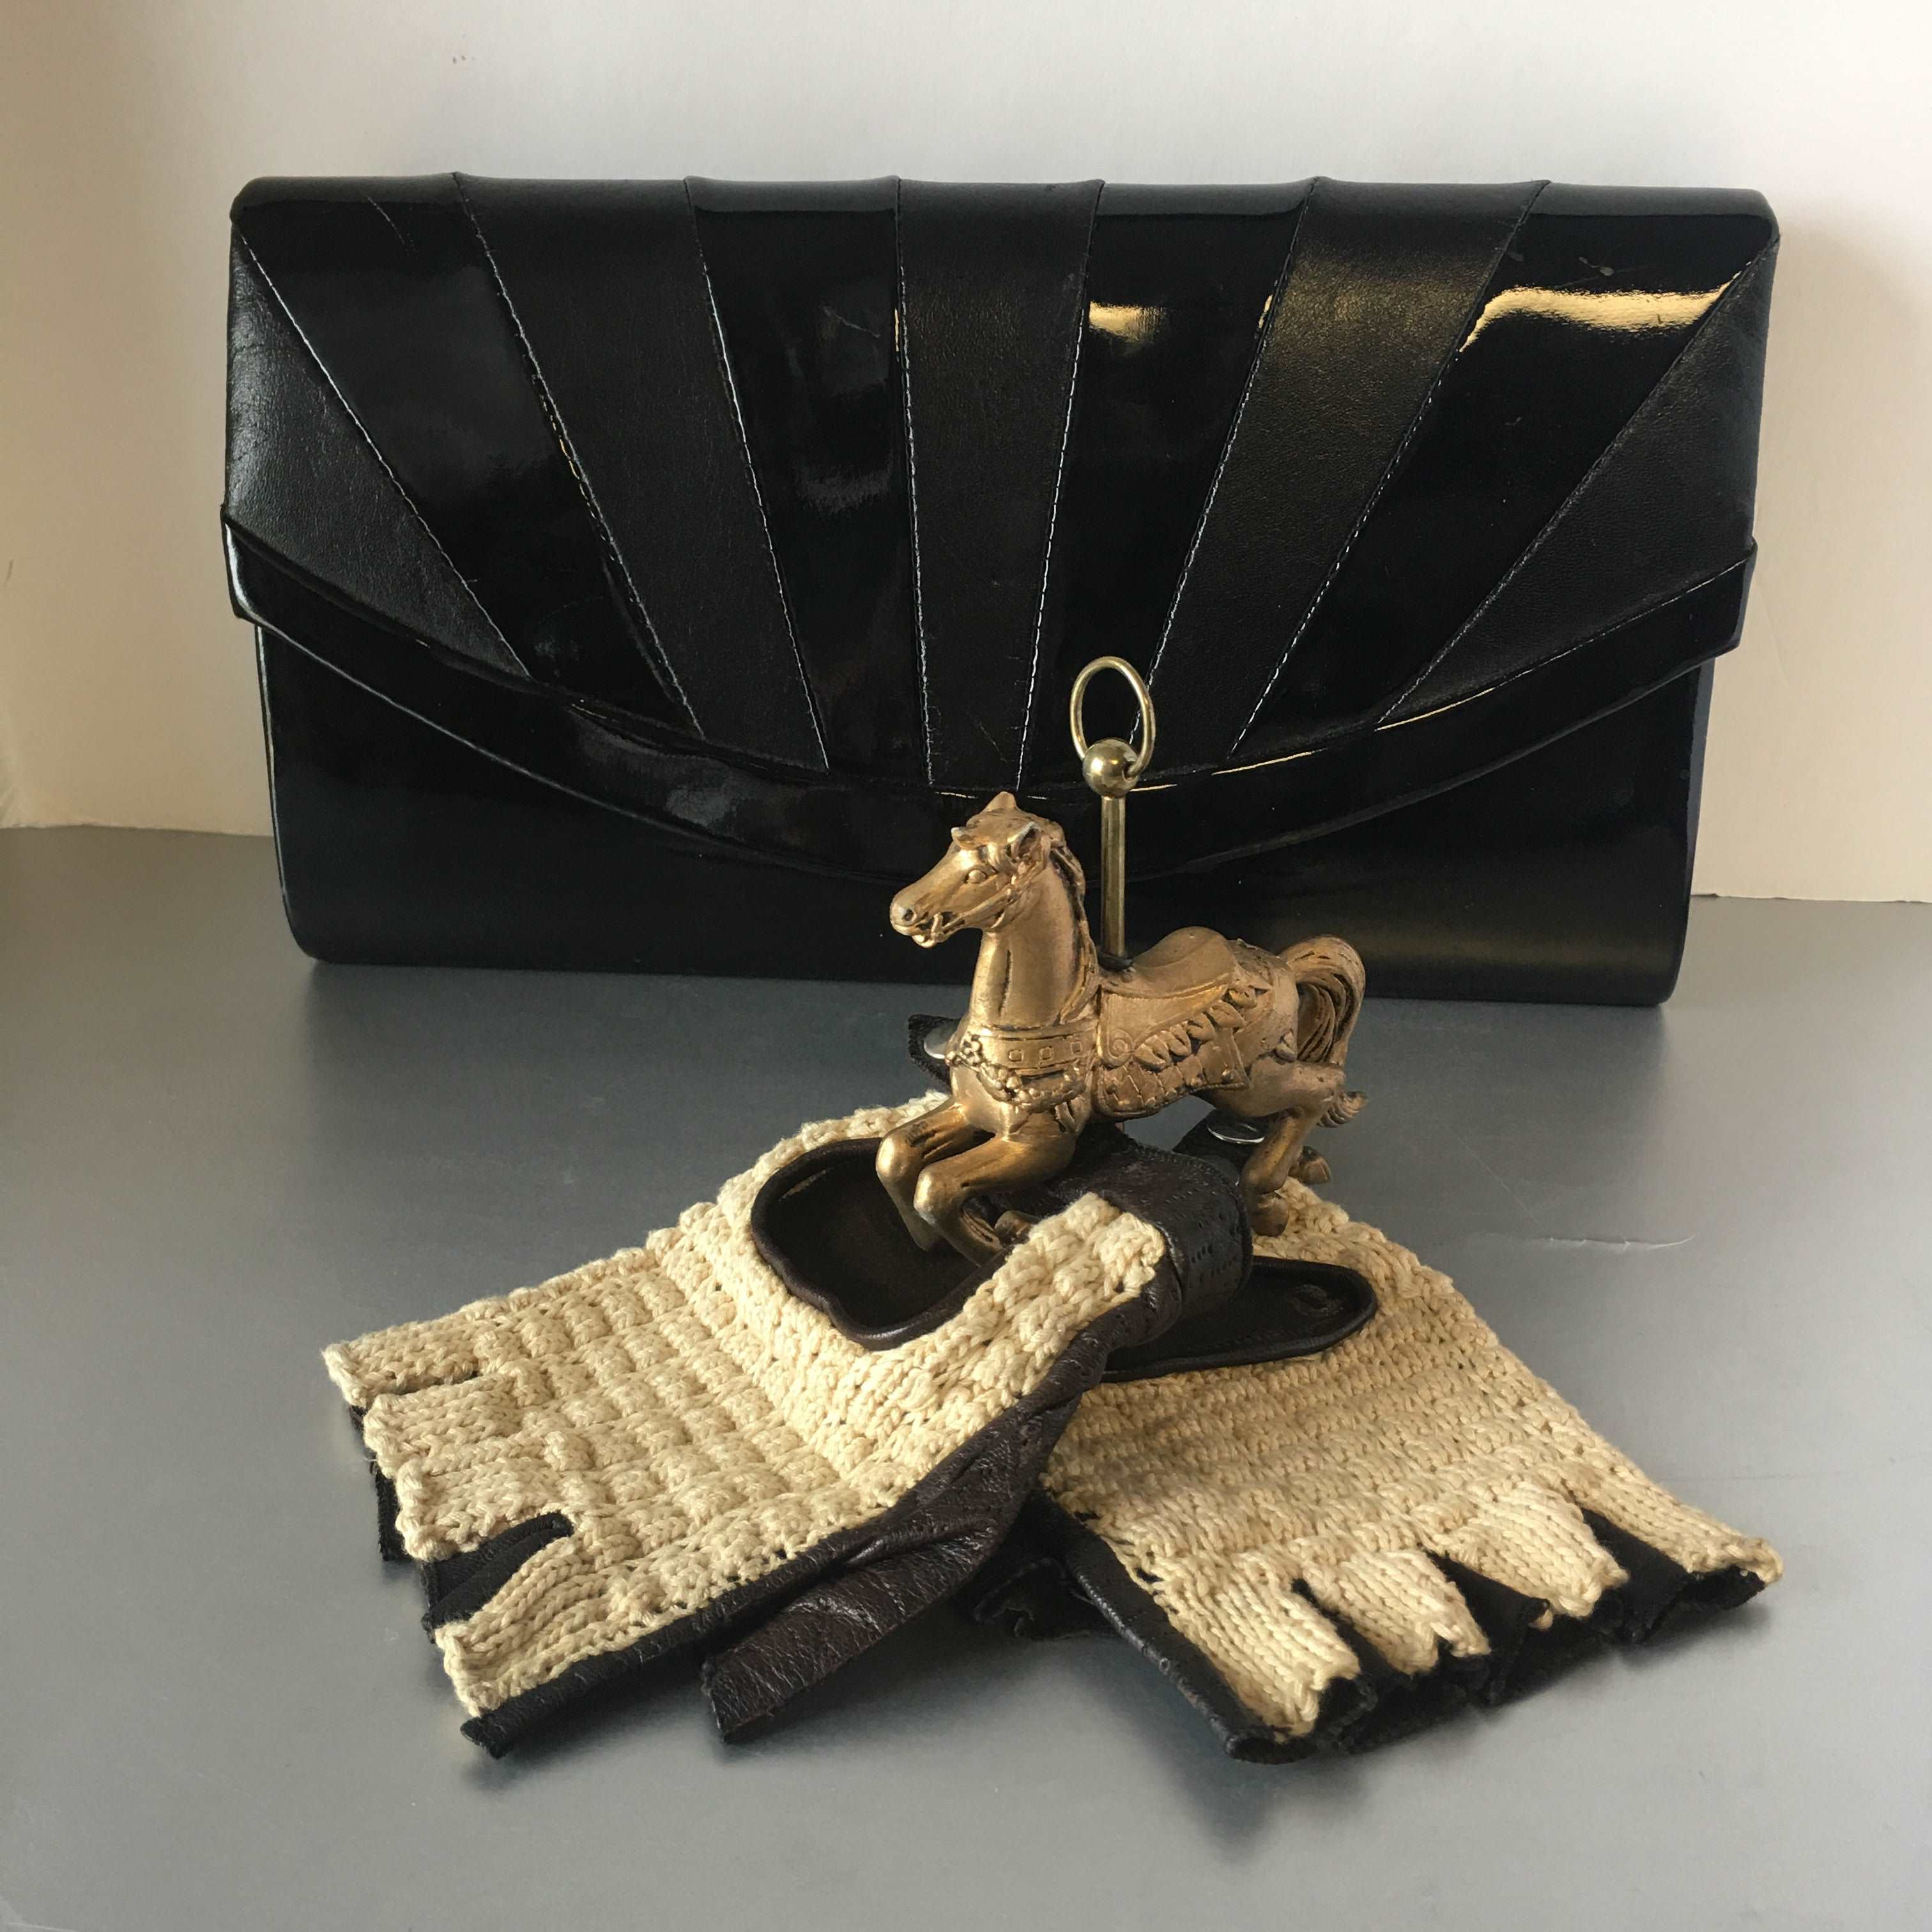 Black Patent Leather Envelope Clutch Bag Vintage Accessory